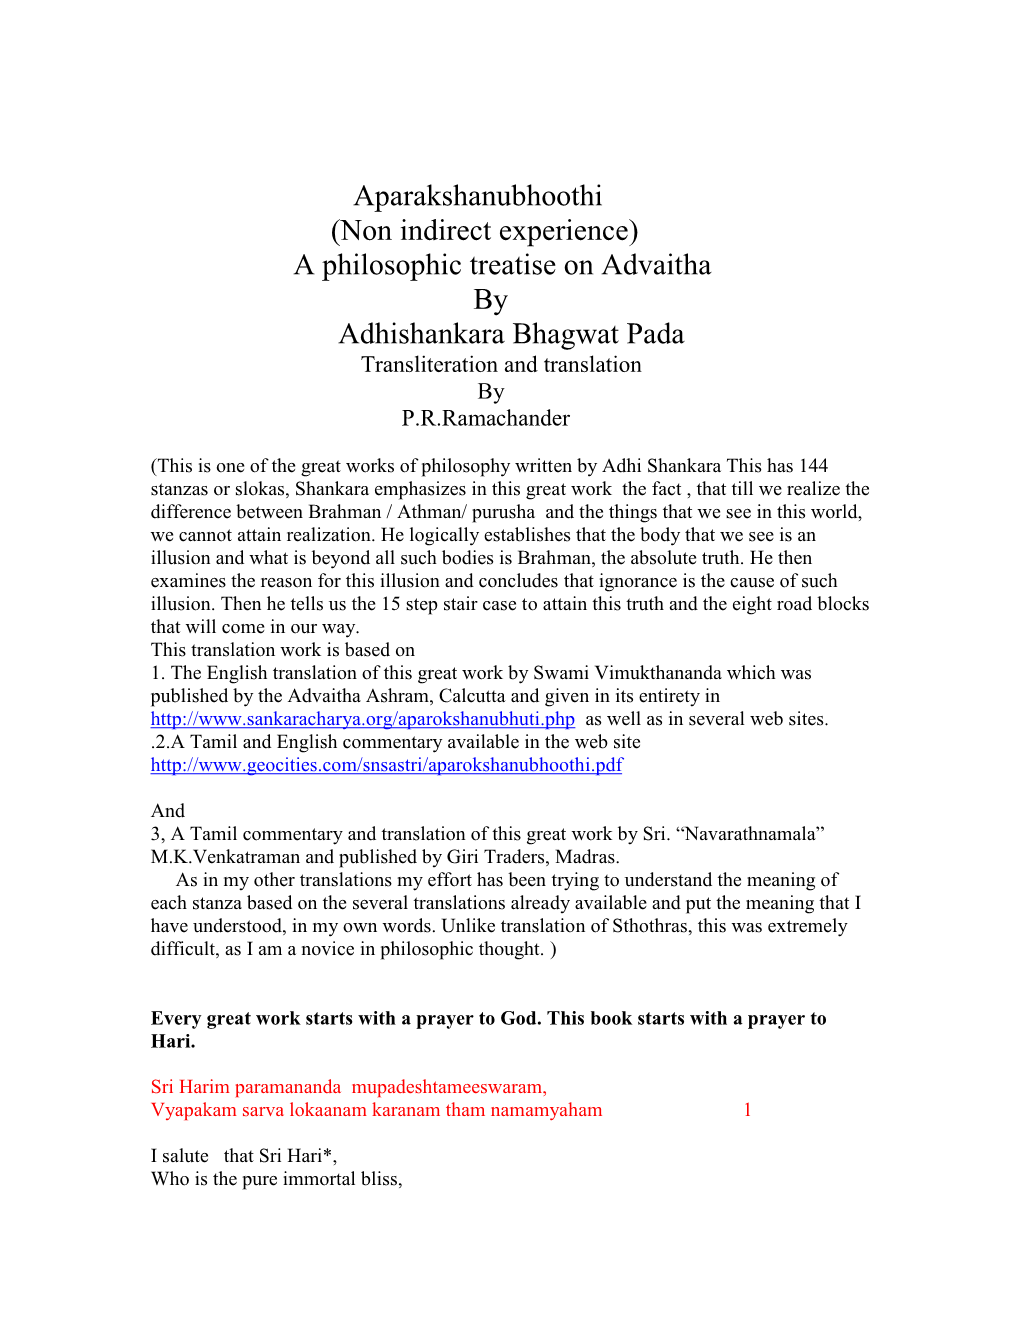 Aparakshanubhoothi (Non Indirect Experience) a Philosophic Treatise on Advaitha by Adhishankara Bhagwat Pada Transliteration and Translation by P.R.Ramachander